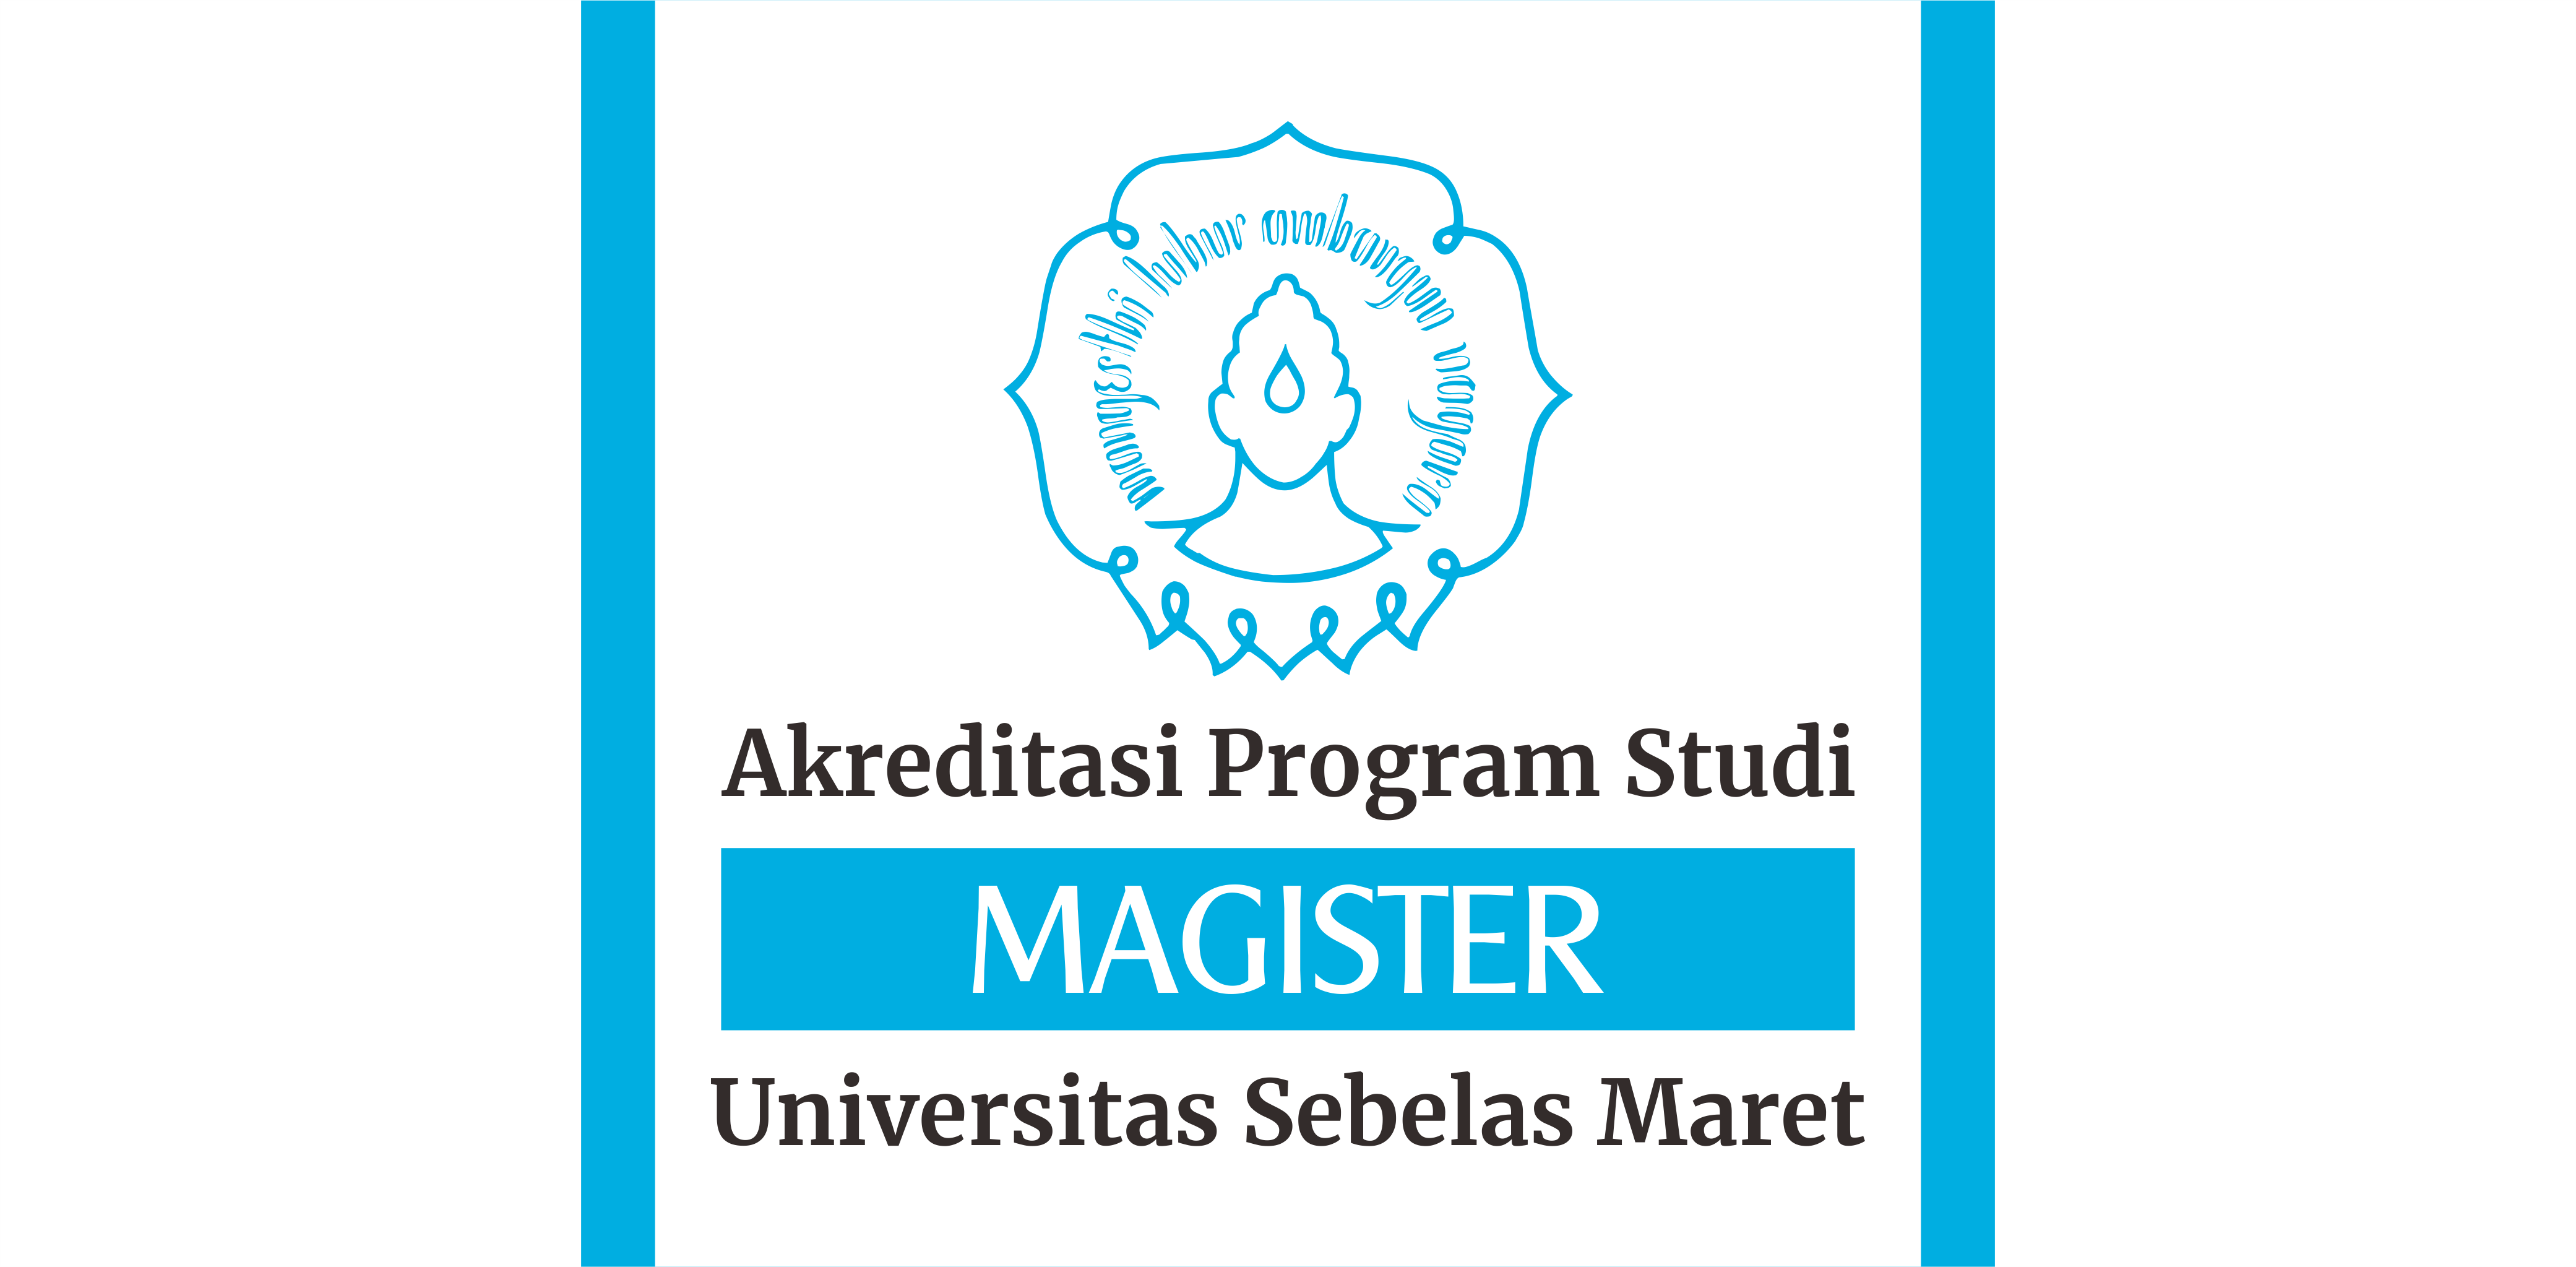 Akreditasi Program Studi di Program Magister UNS